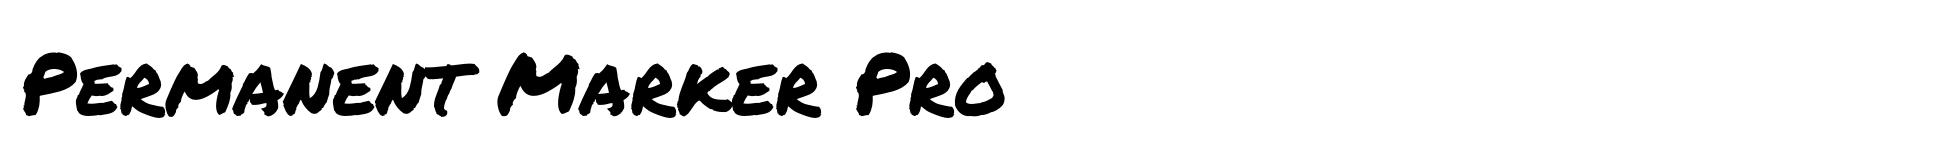 Permanent Marker Pro